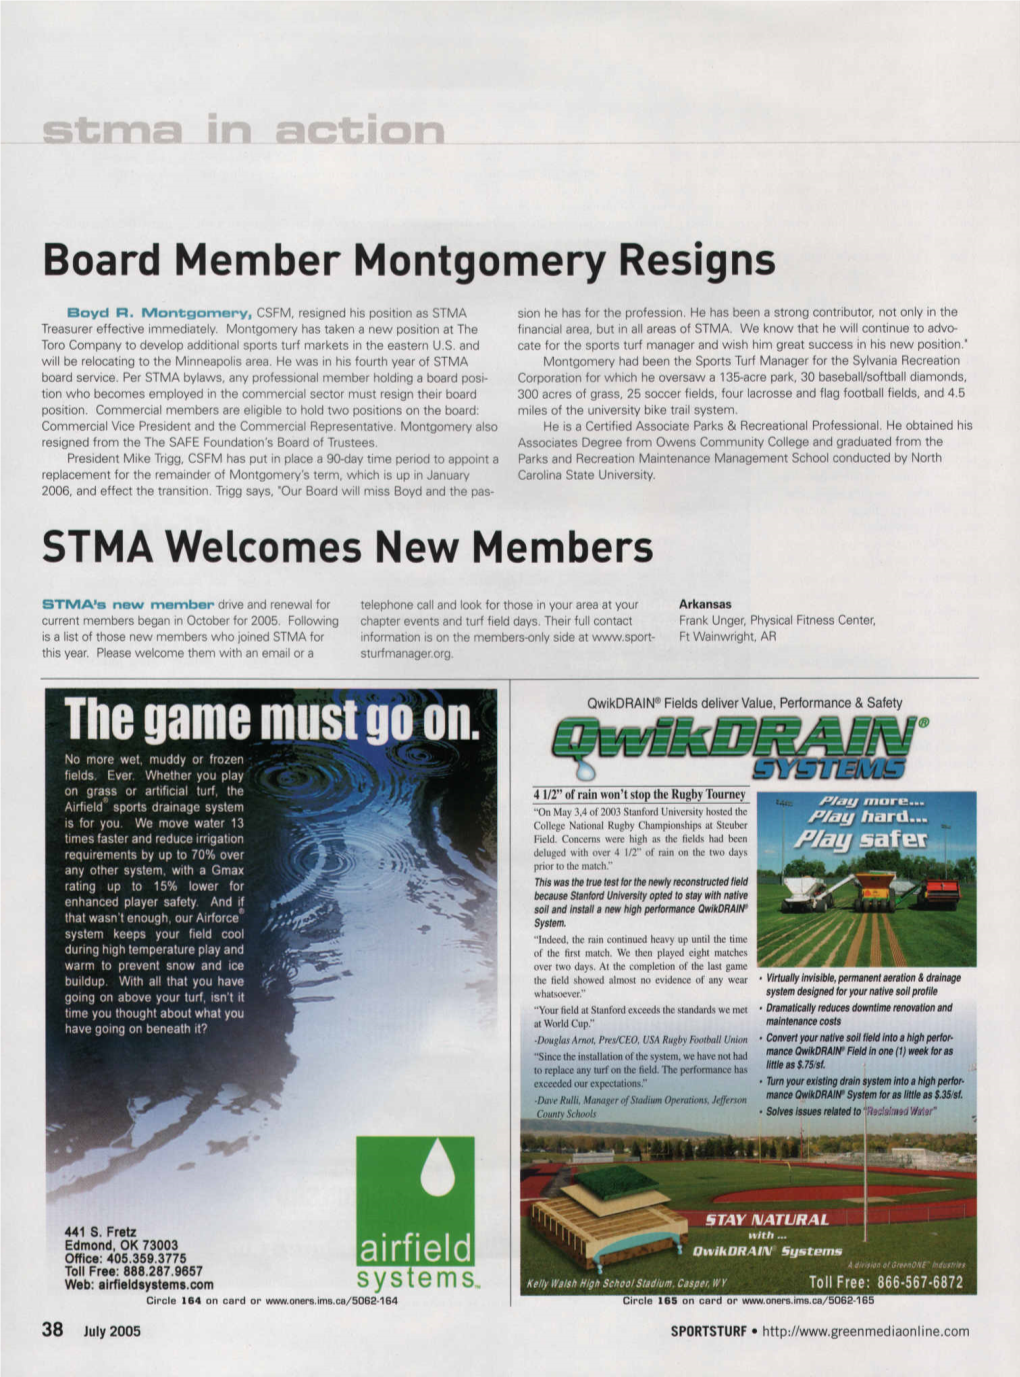 Board Member Montgomery Resigns STMA Welcomes New Members